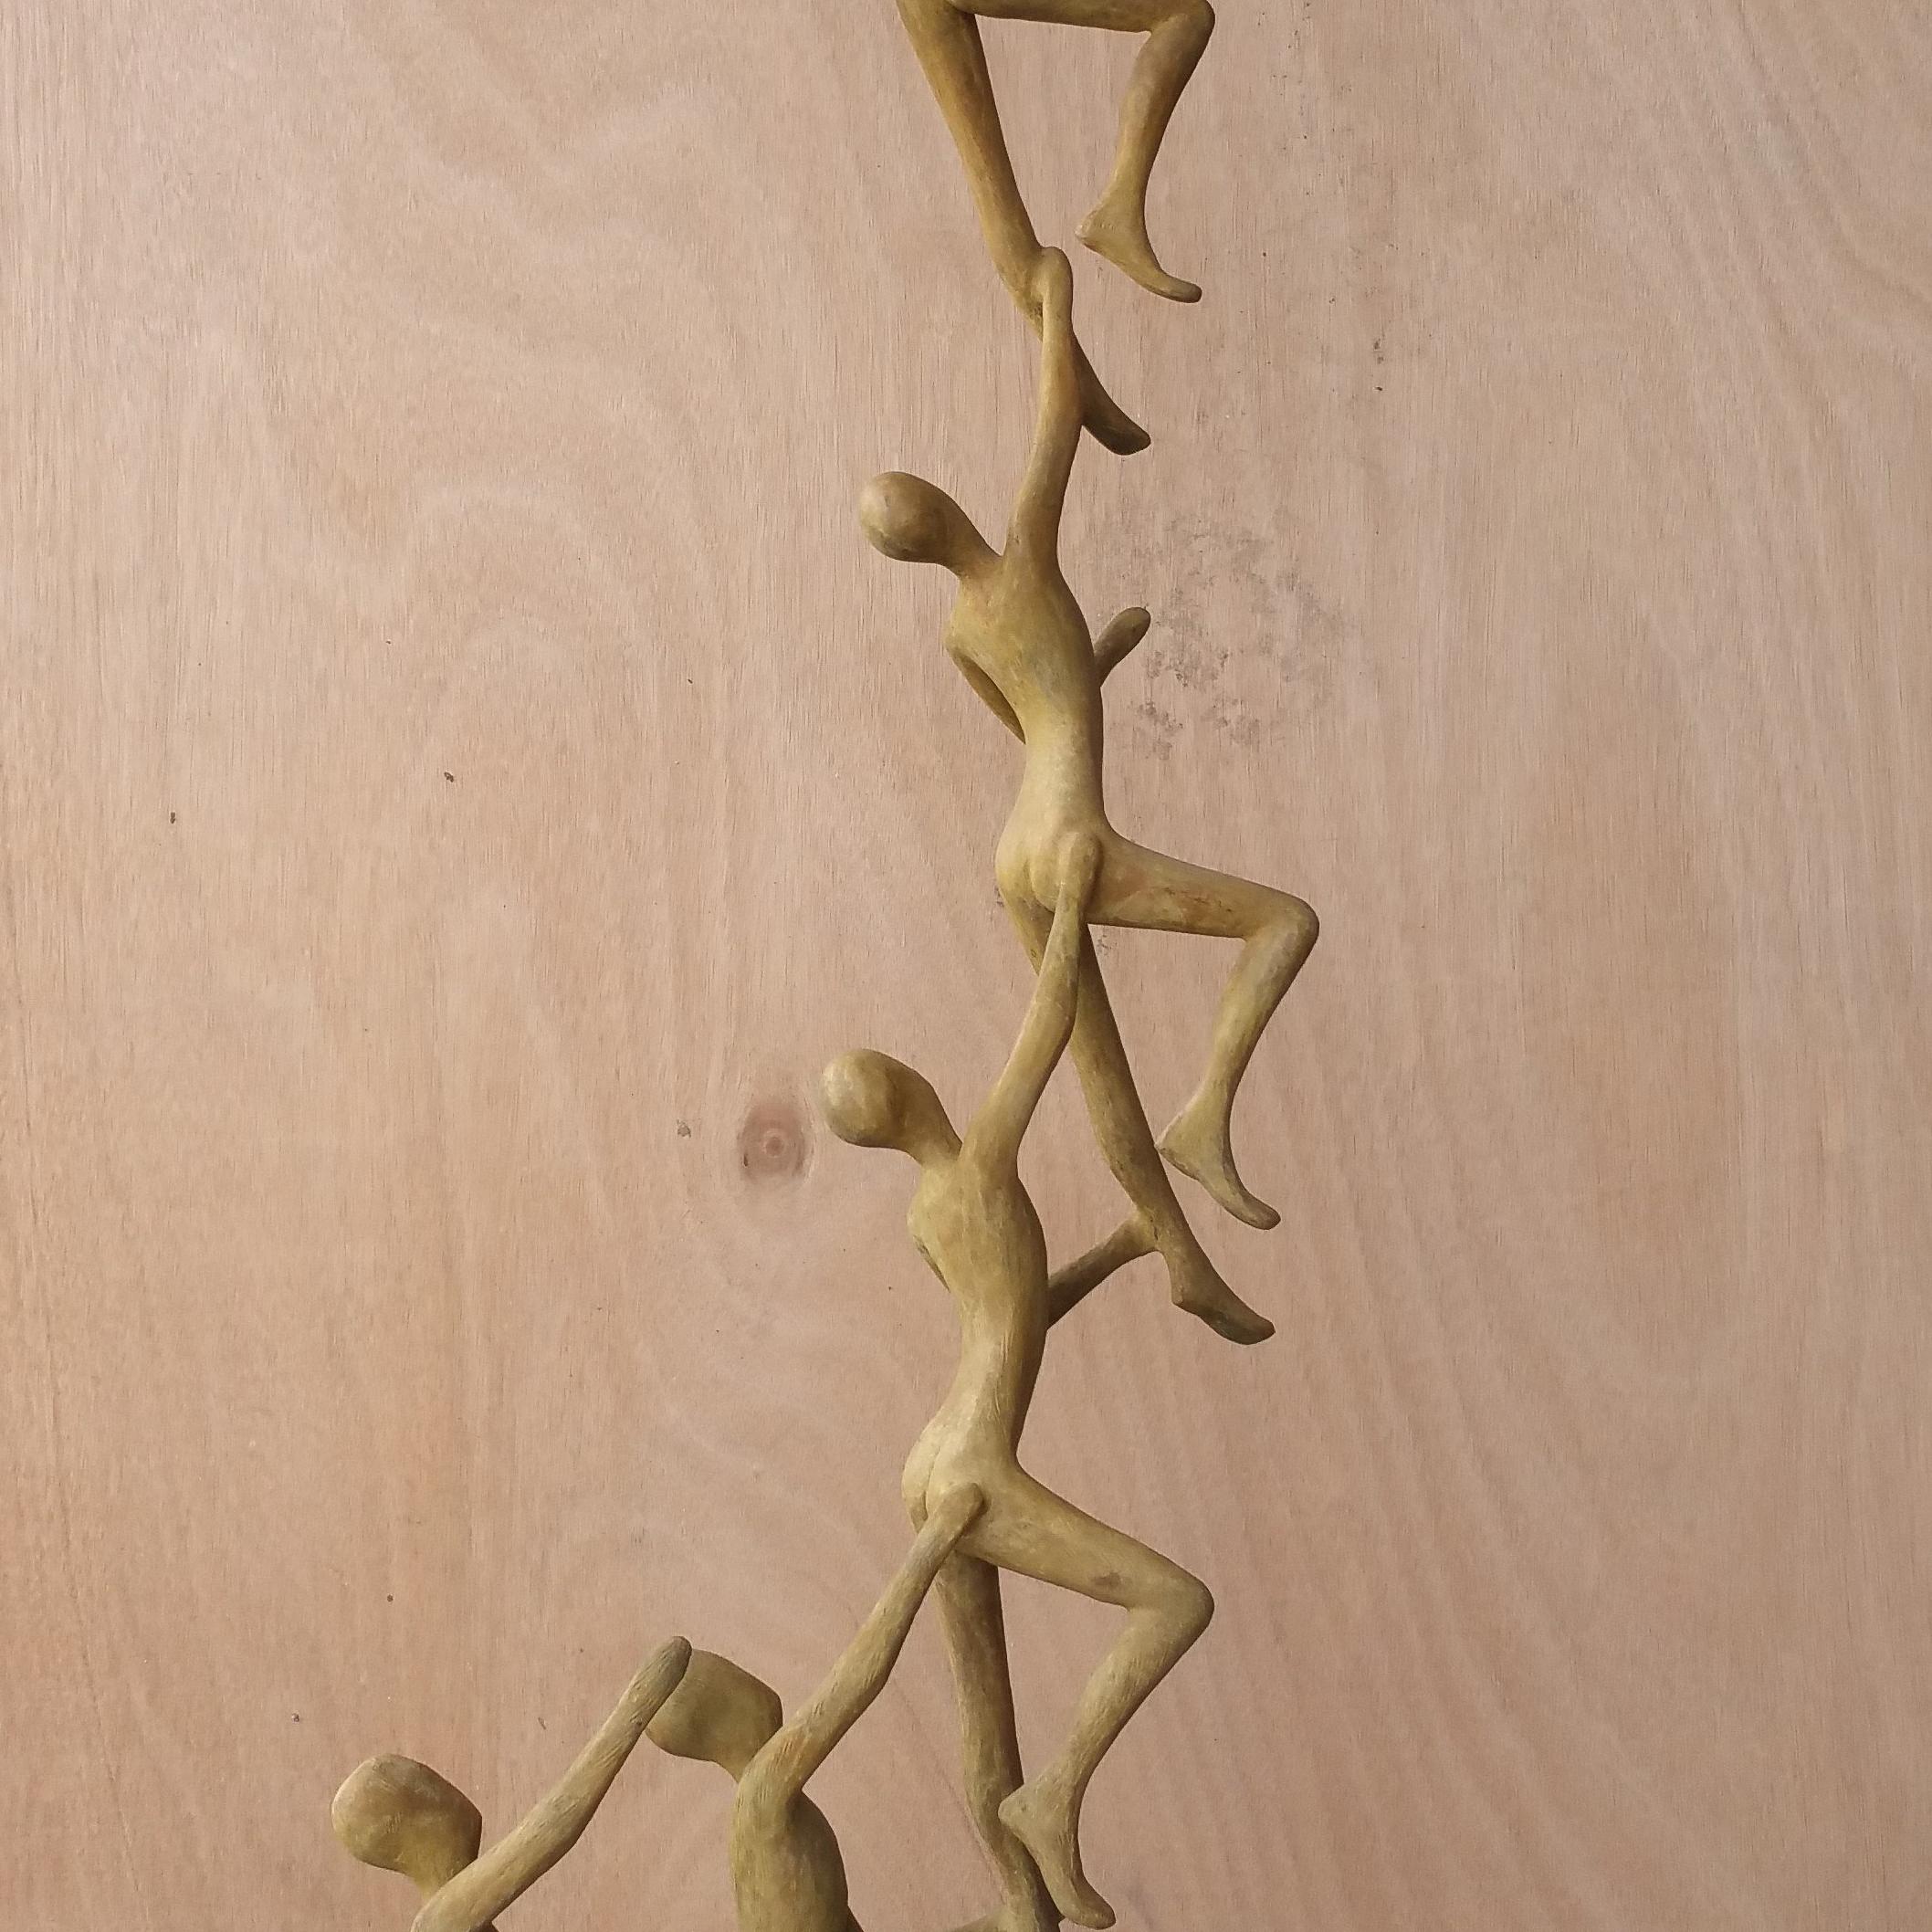 Connection - Contemporary Sculpture by Tolla Inbar